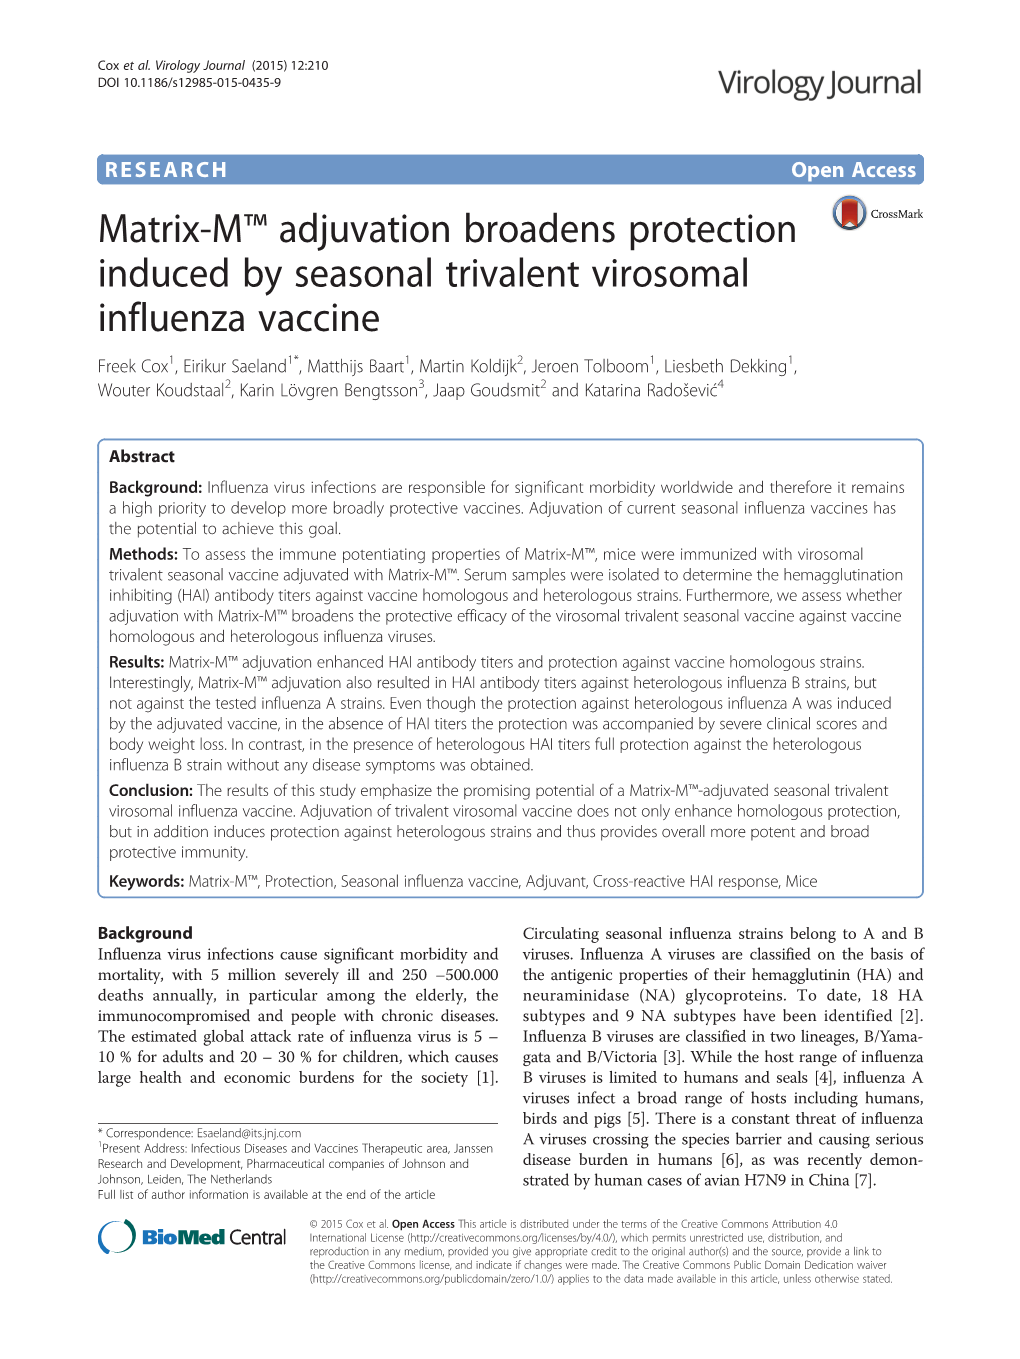 Matrix-M™ Adjuvation Broadens Protection Induced by Seasonal Trivalent Virosomal Influenza Vaccine